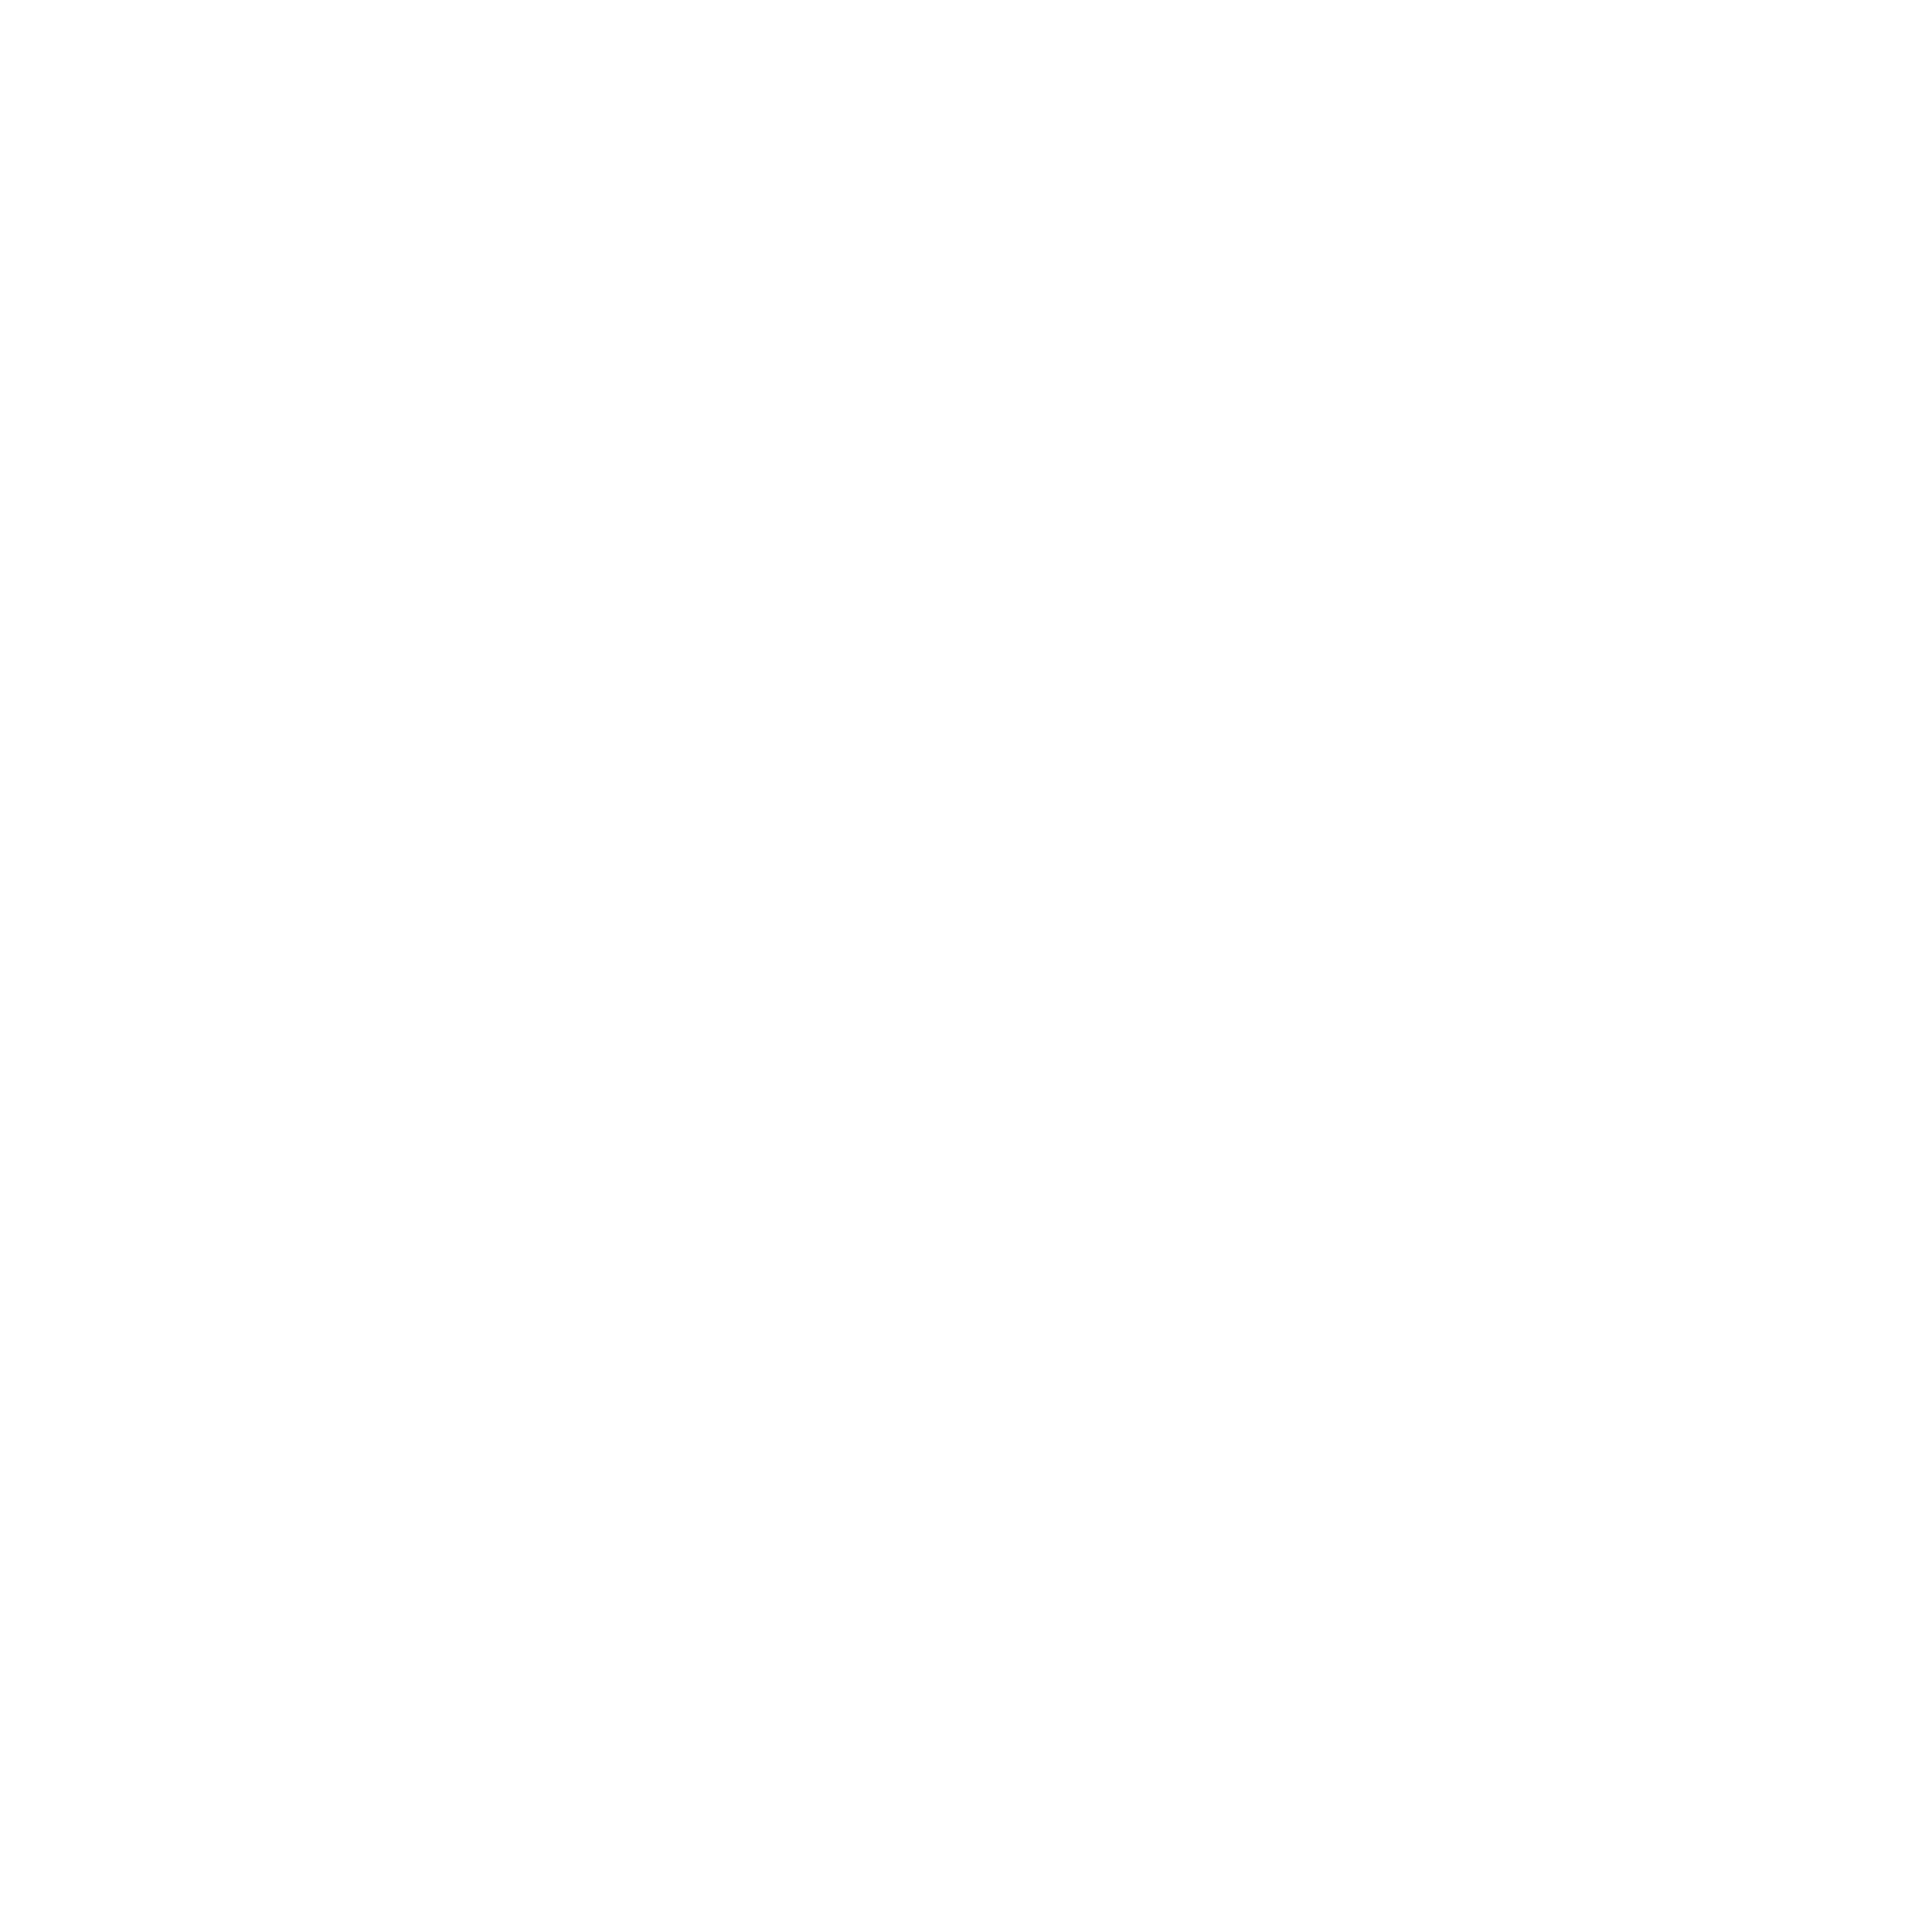 Belfiore Cheese